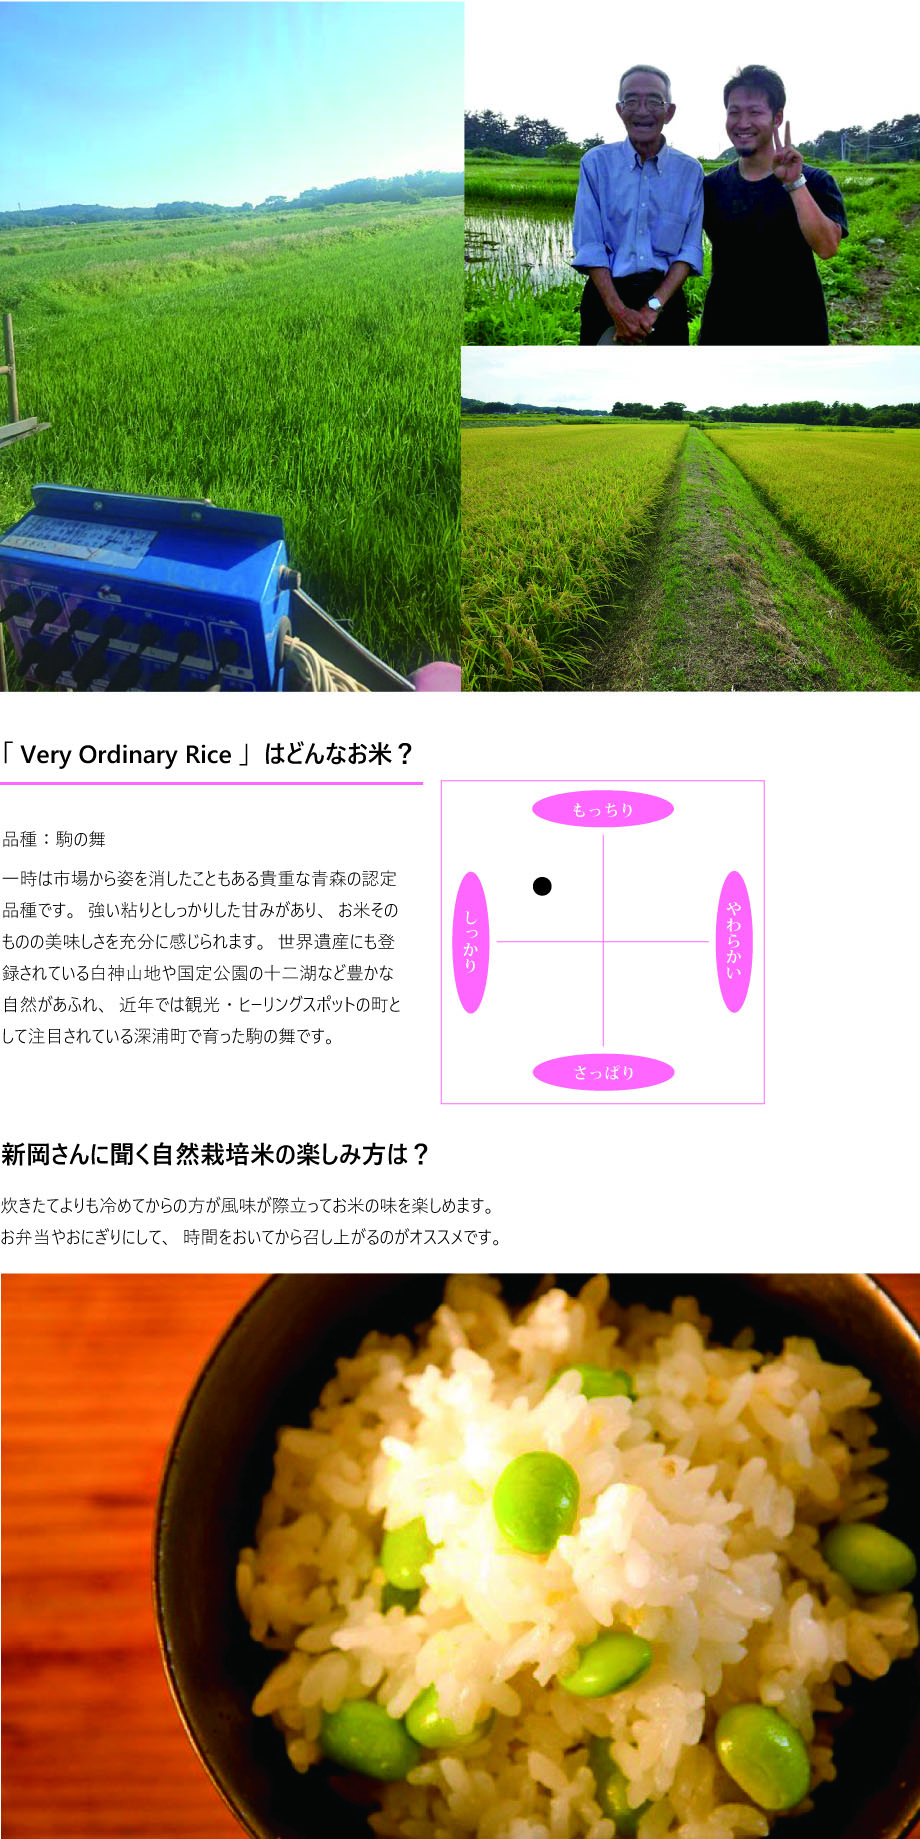 (R03産)Very Ordinary Rice白米10kg